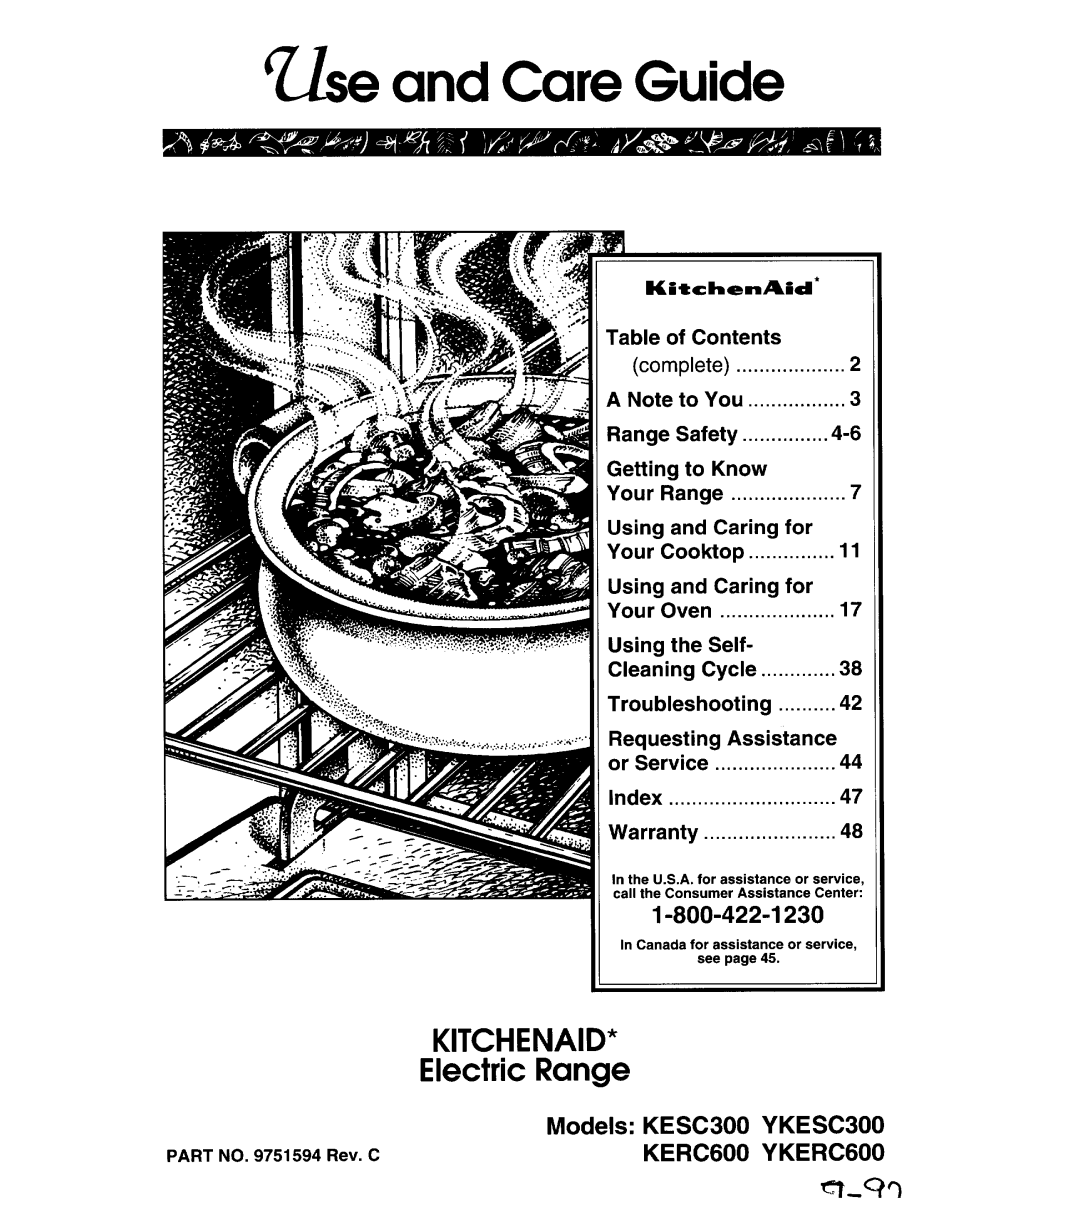 KitchenAid YKERC600, YKESC300 manual 